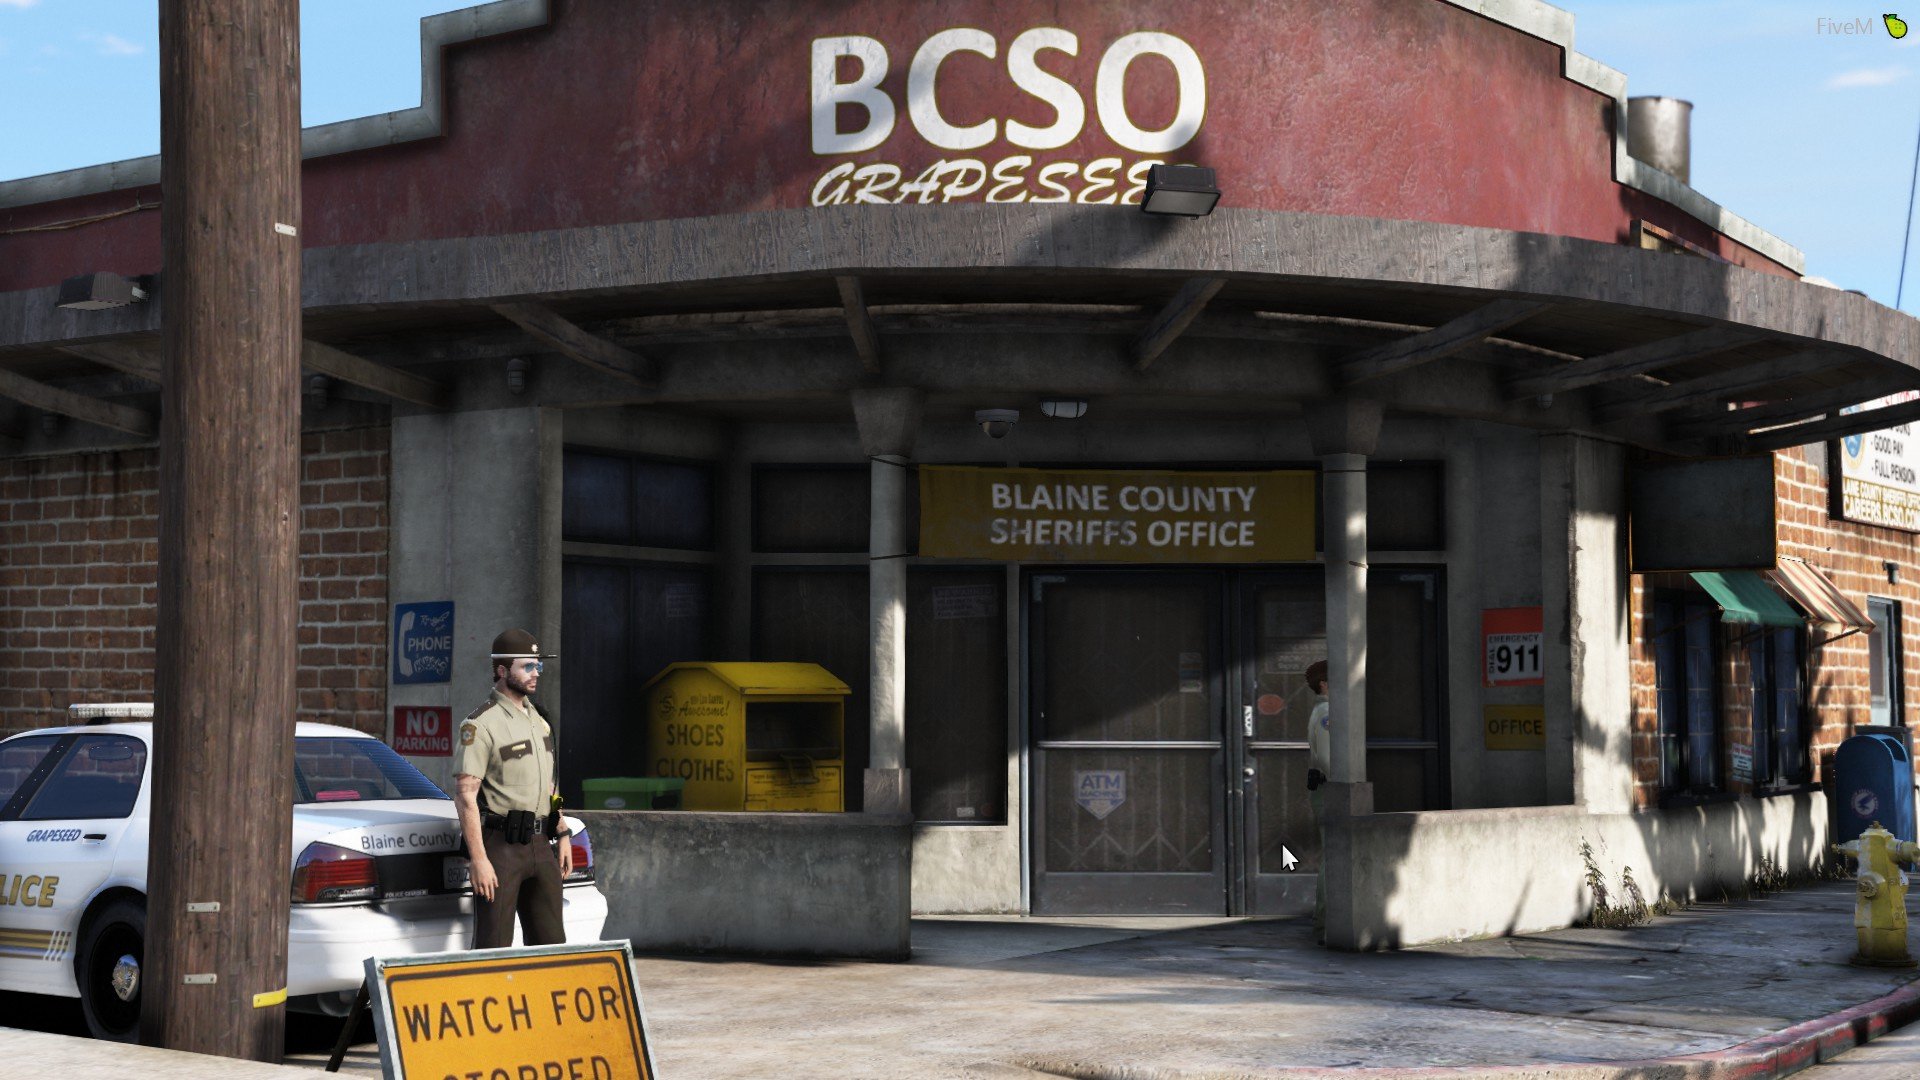 Blaine county sheriff office gta 5 фото 63